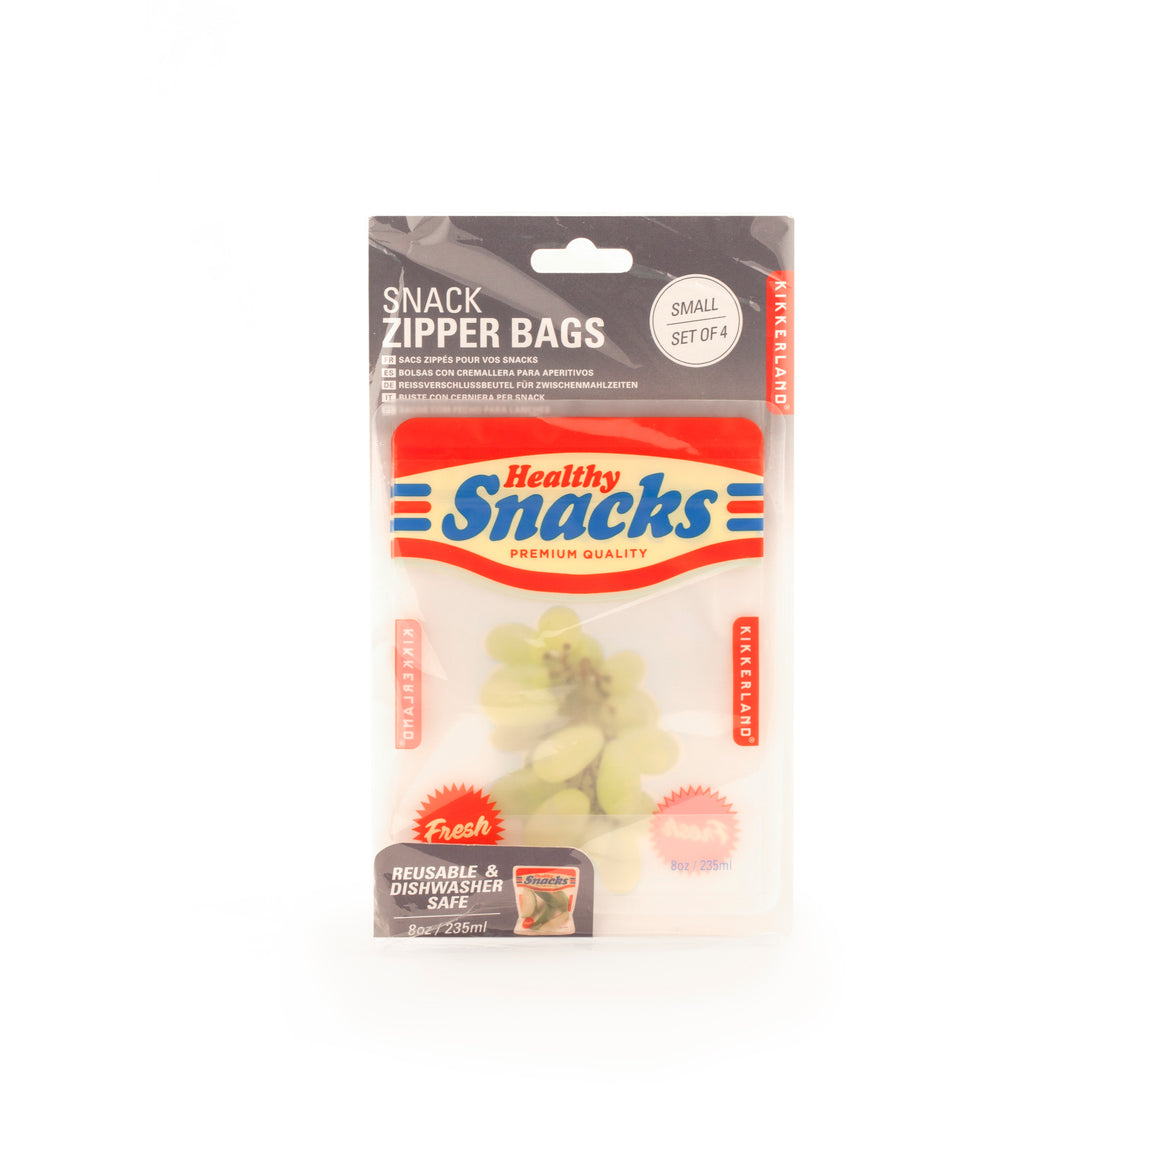 Snack Zipper Bags | Set of 4 | Healthy Snacks